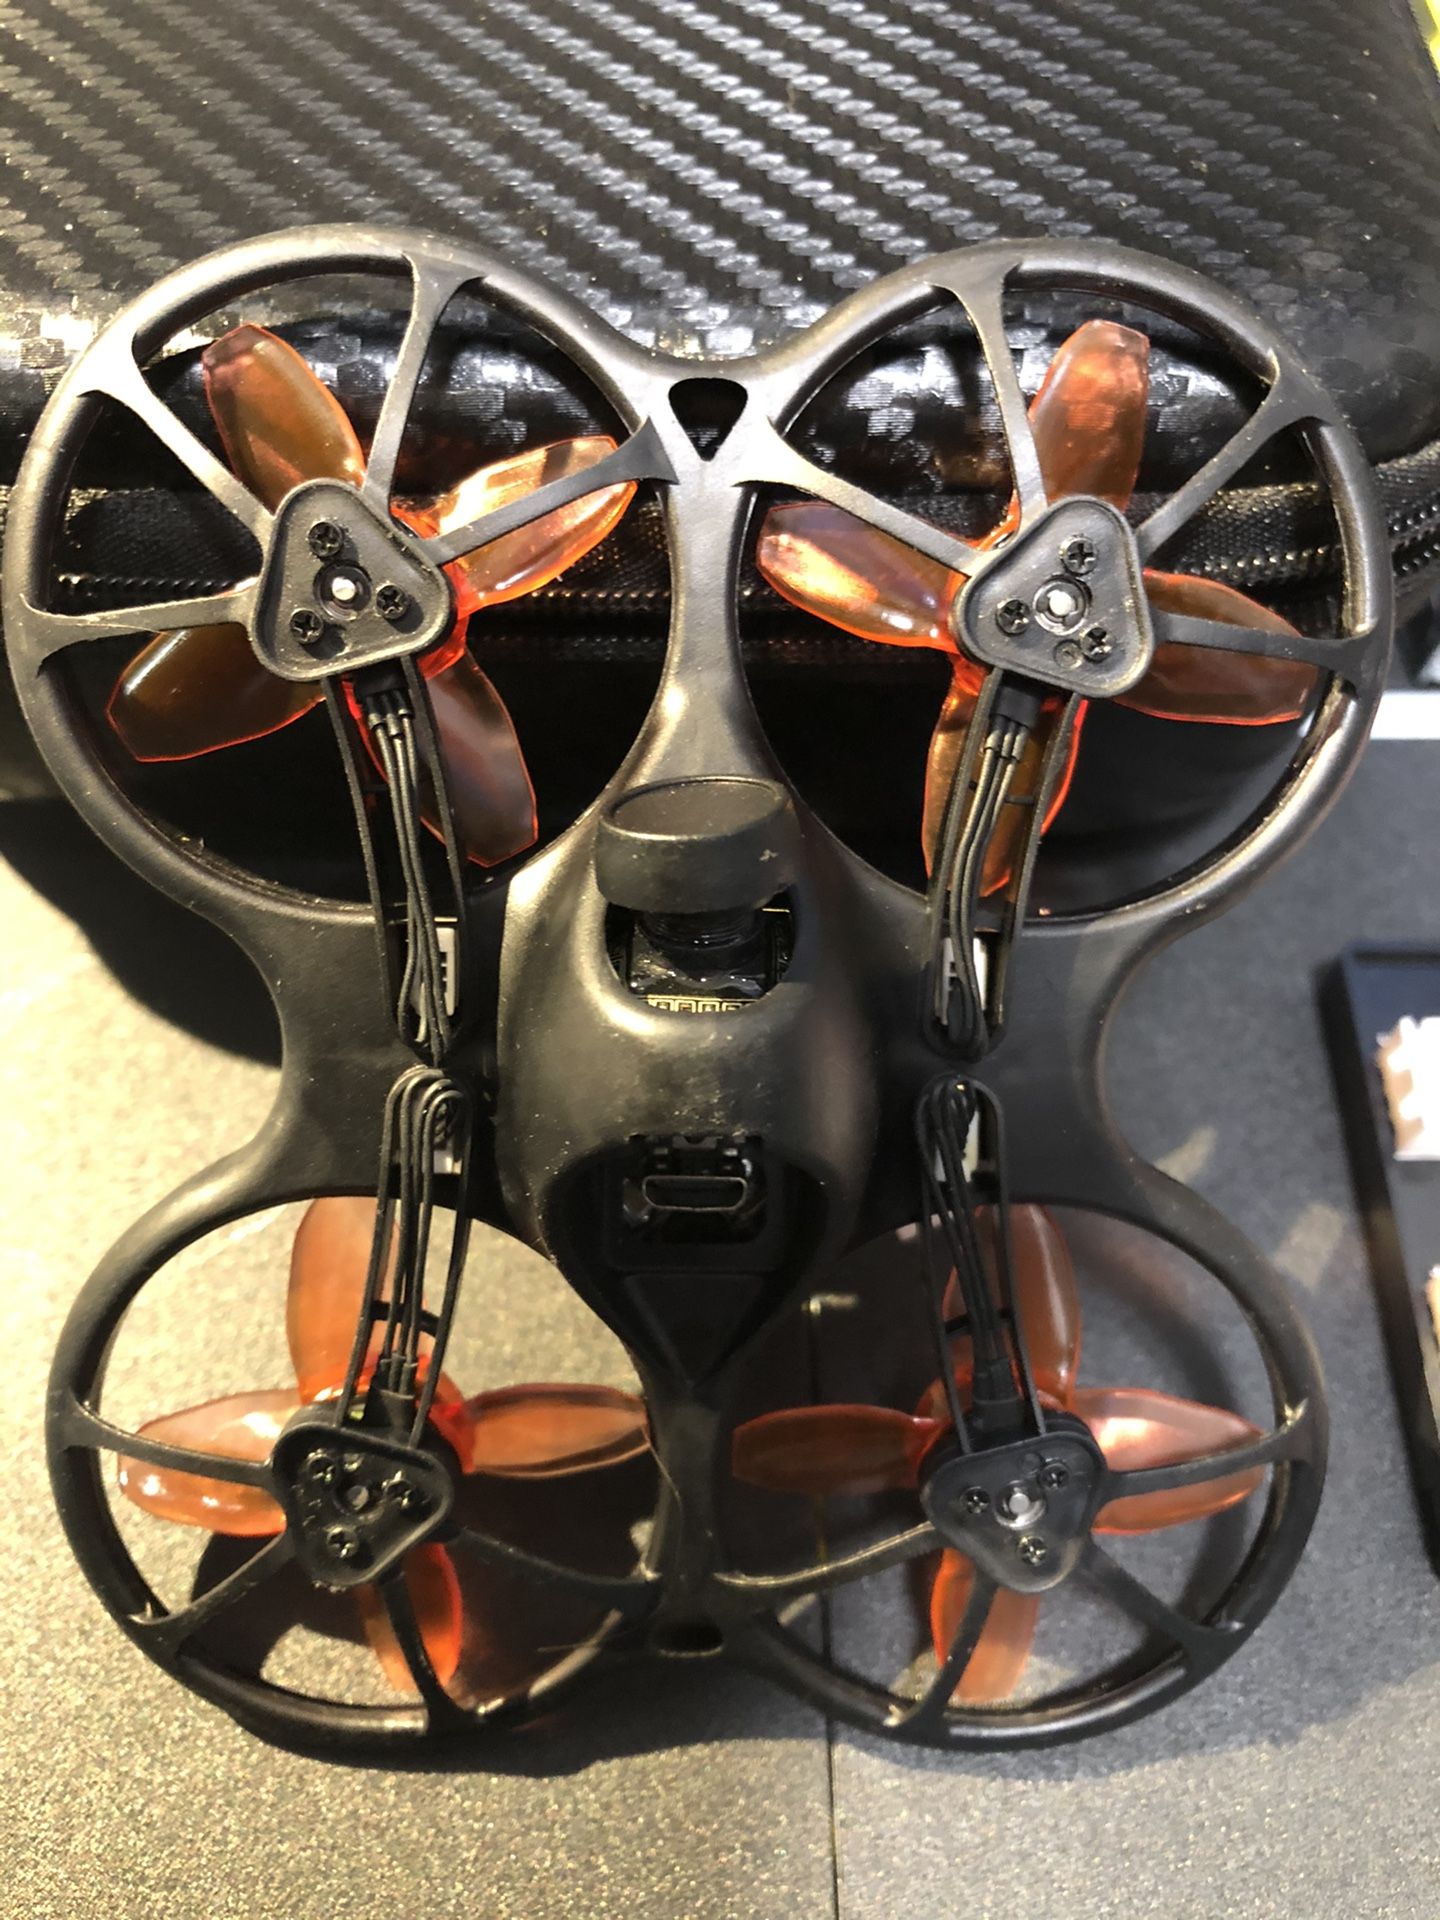 EMAX Tinyhawk S 1-2s Brushless Micro Indoor Racing Drone.